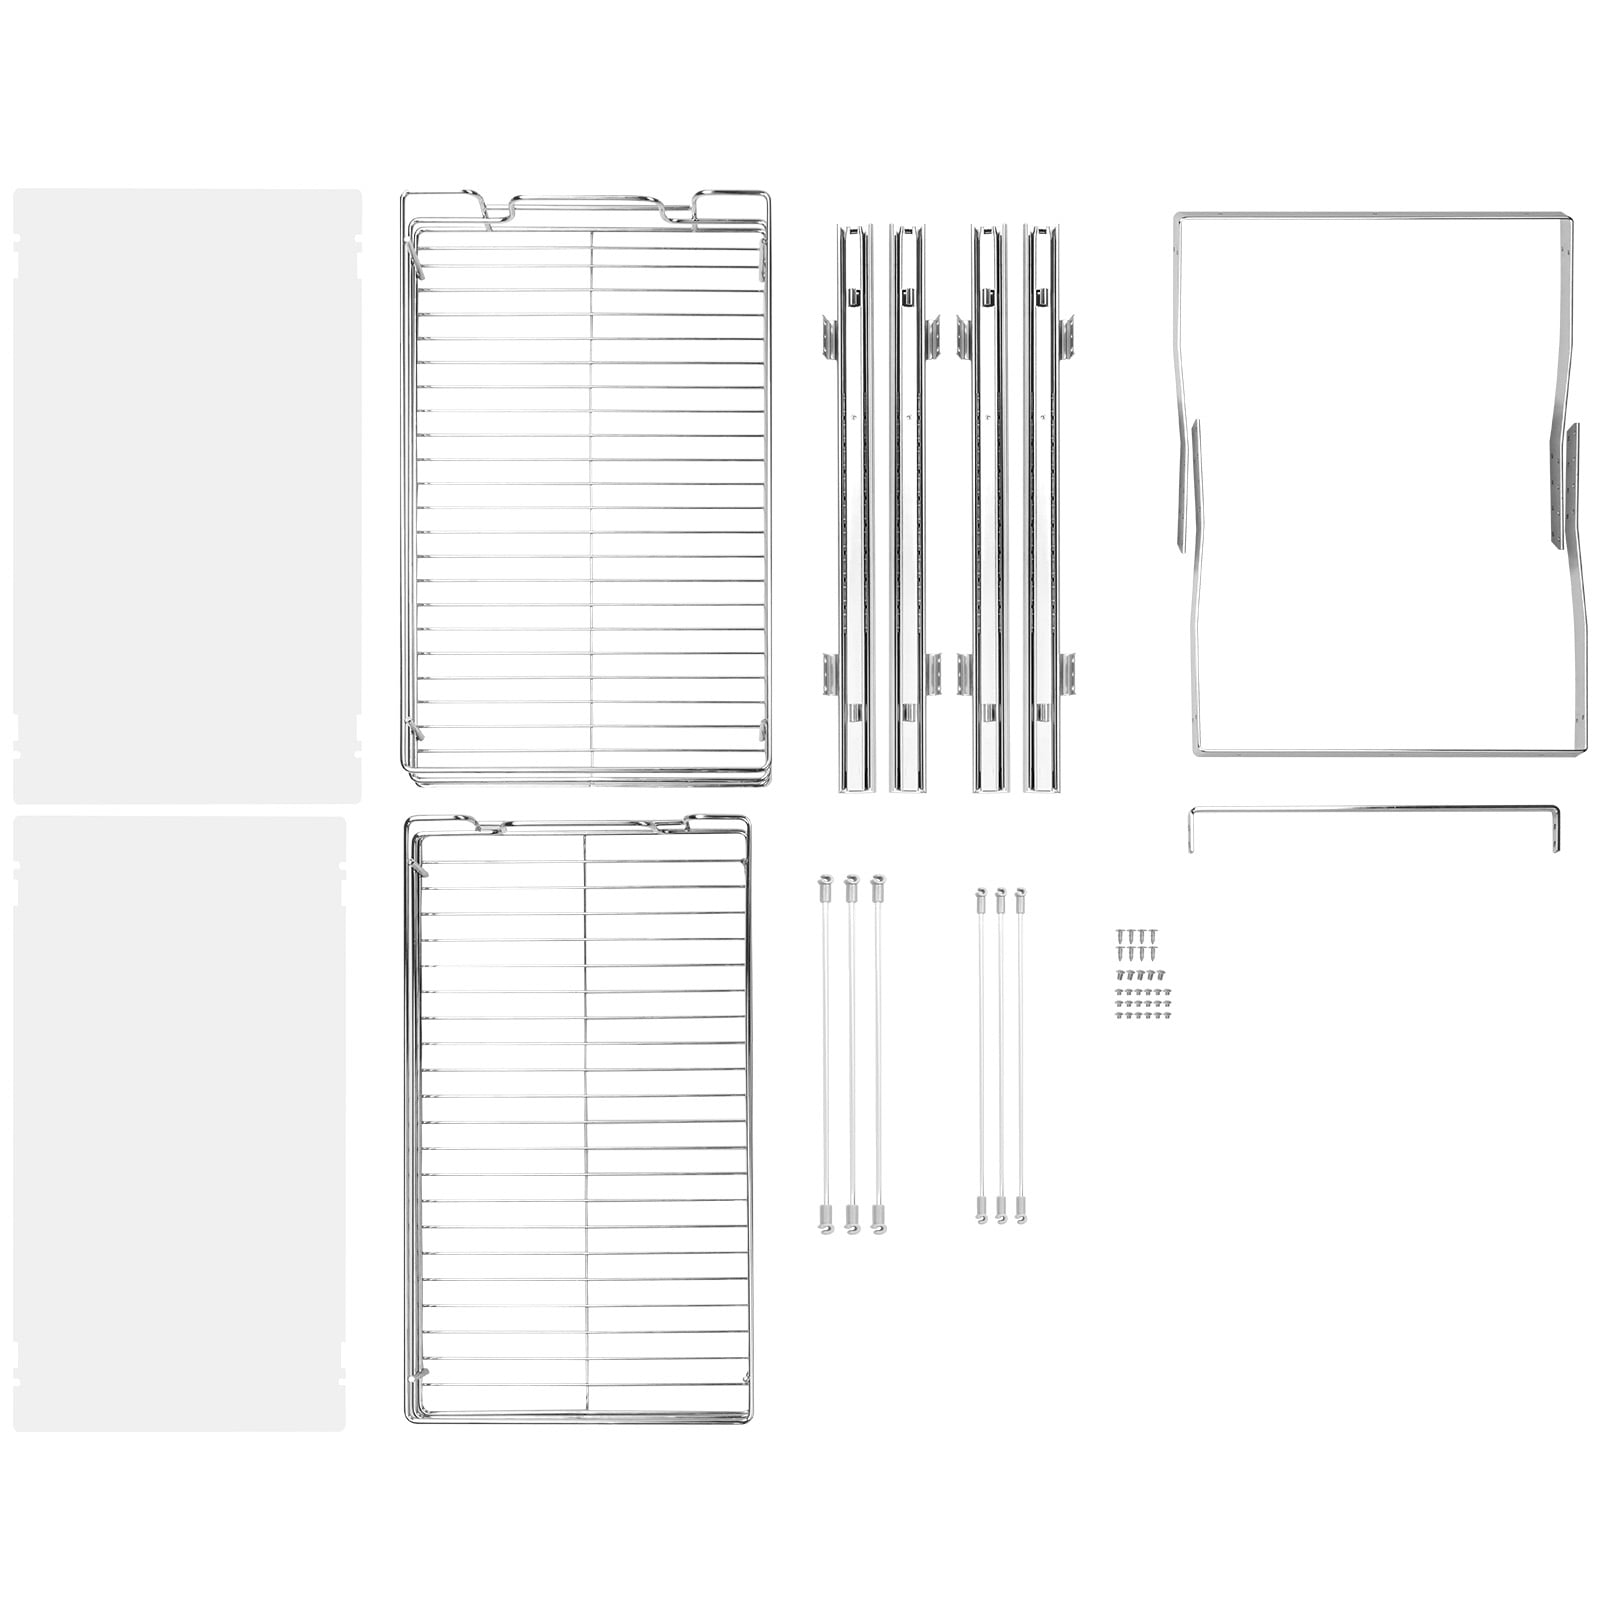 Bentism 2-Tier Wire Pull Out Cabinet Under Sink Organizer 12x17 inch Drawer Basket, Size: 12.3 x 16.5 x 12.7 inch / 313 x 420 x 323 mm, Silver